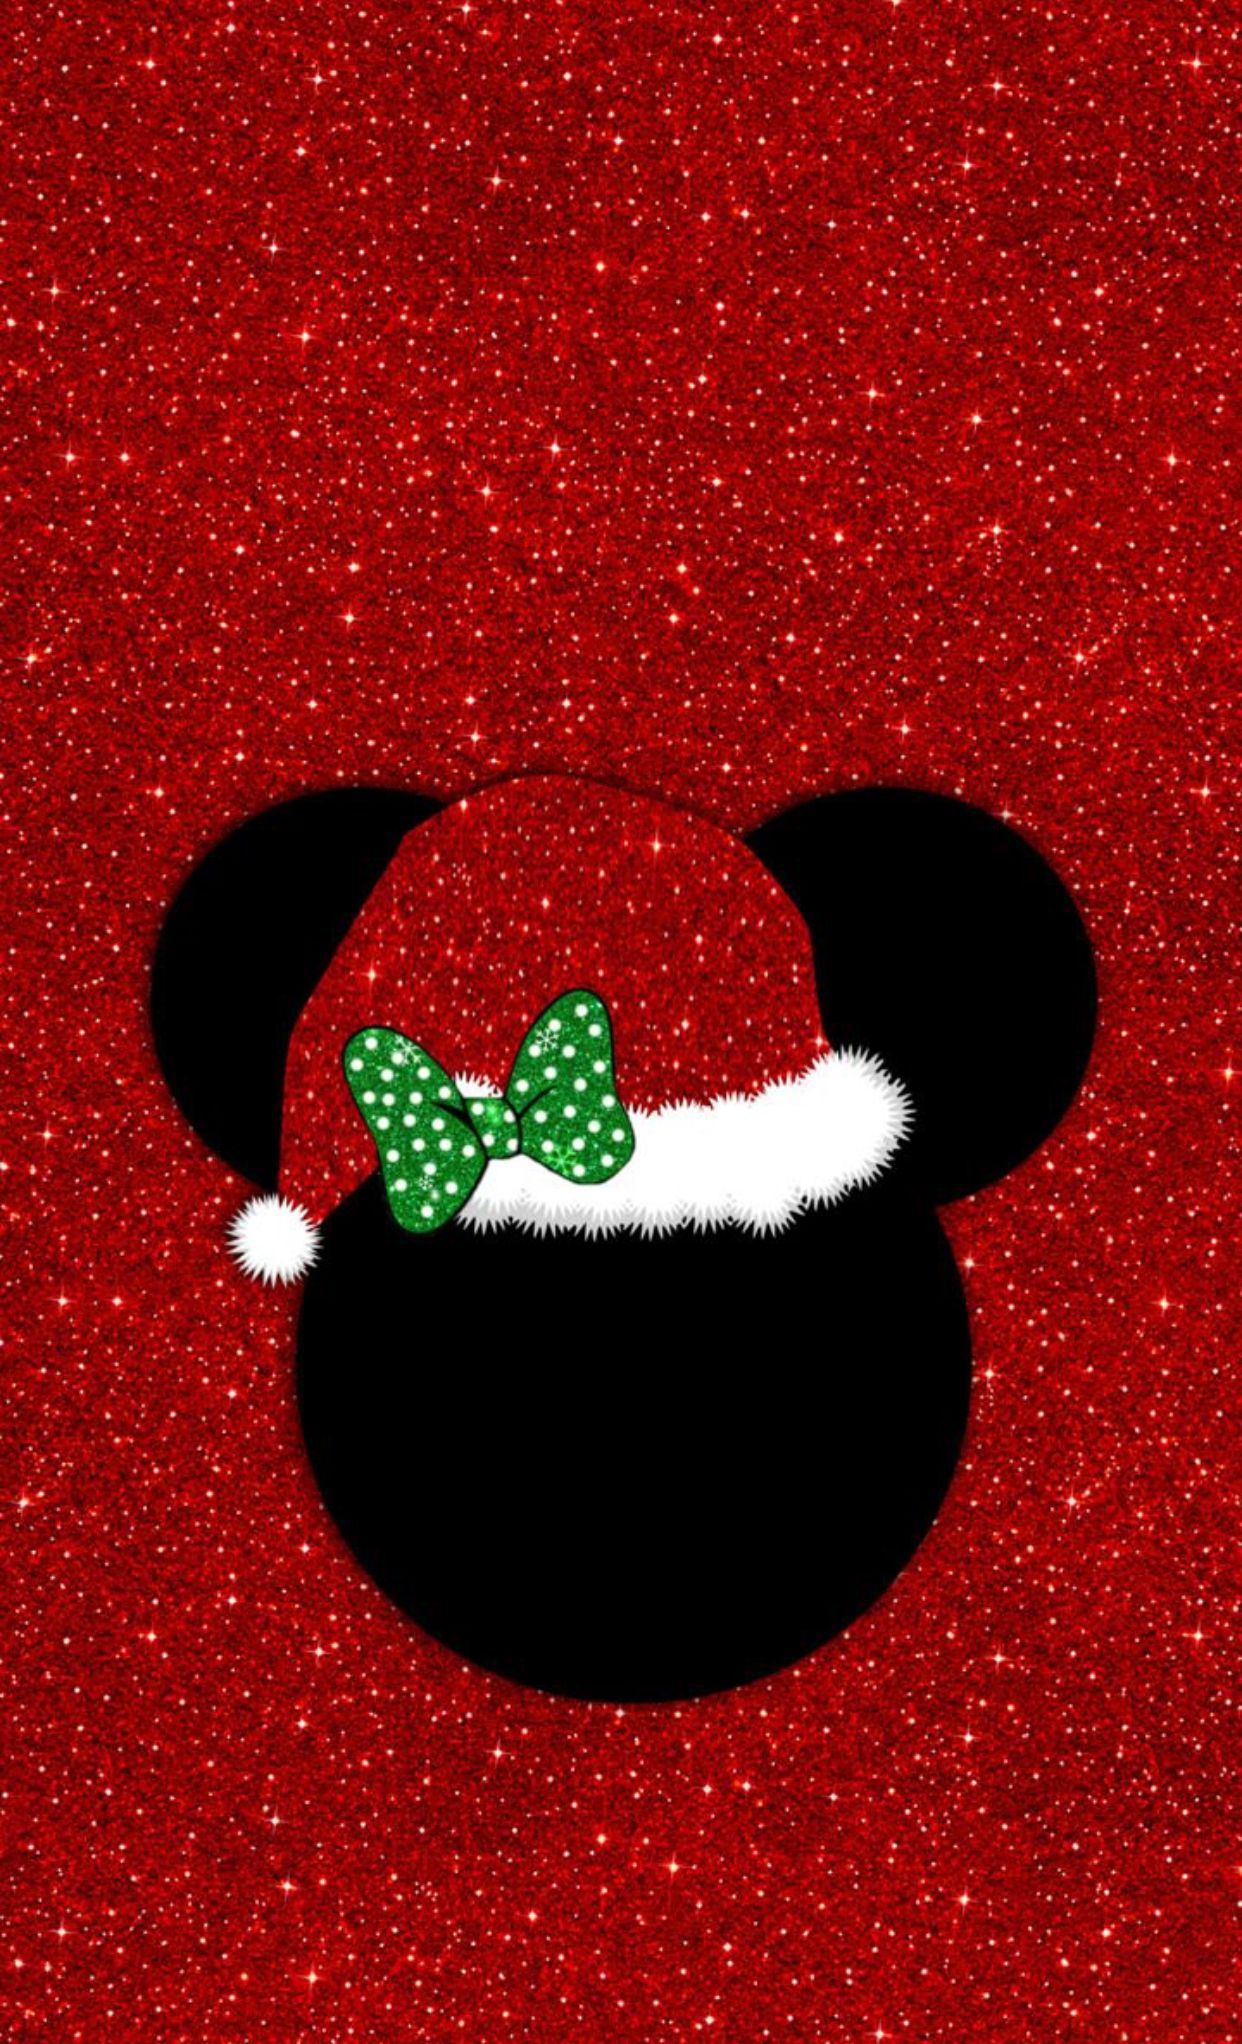 Disney Christmas by aaronhardy523 on DeviantArt